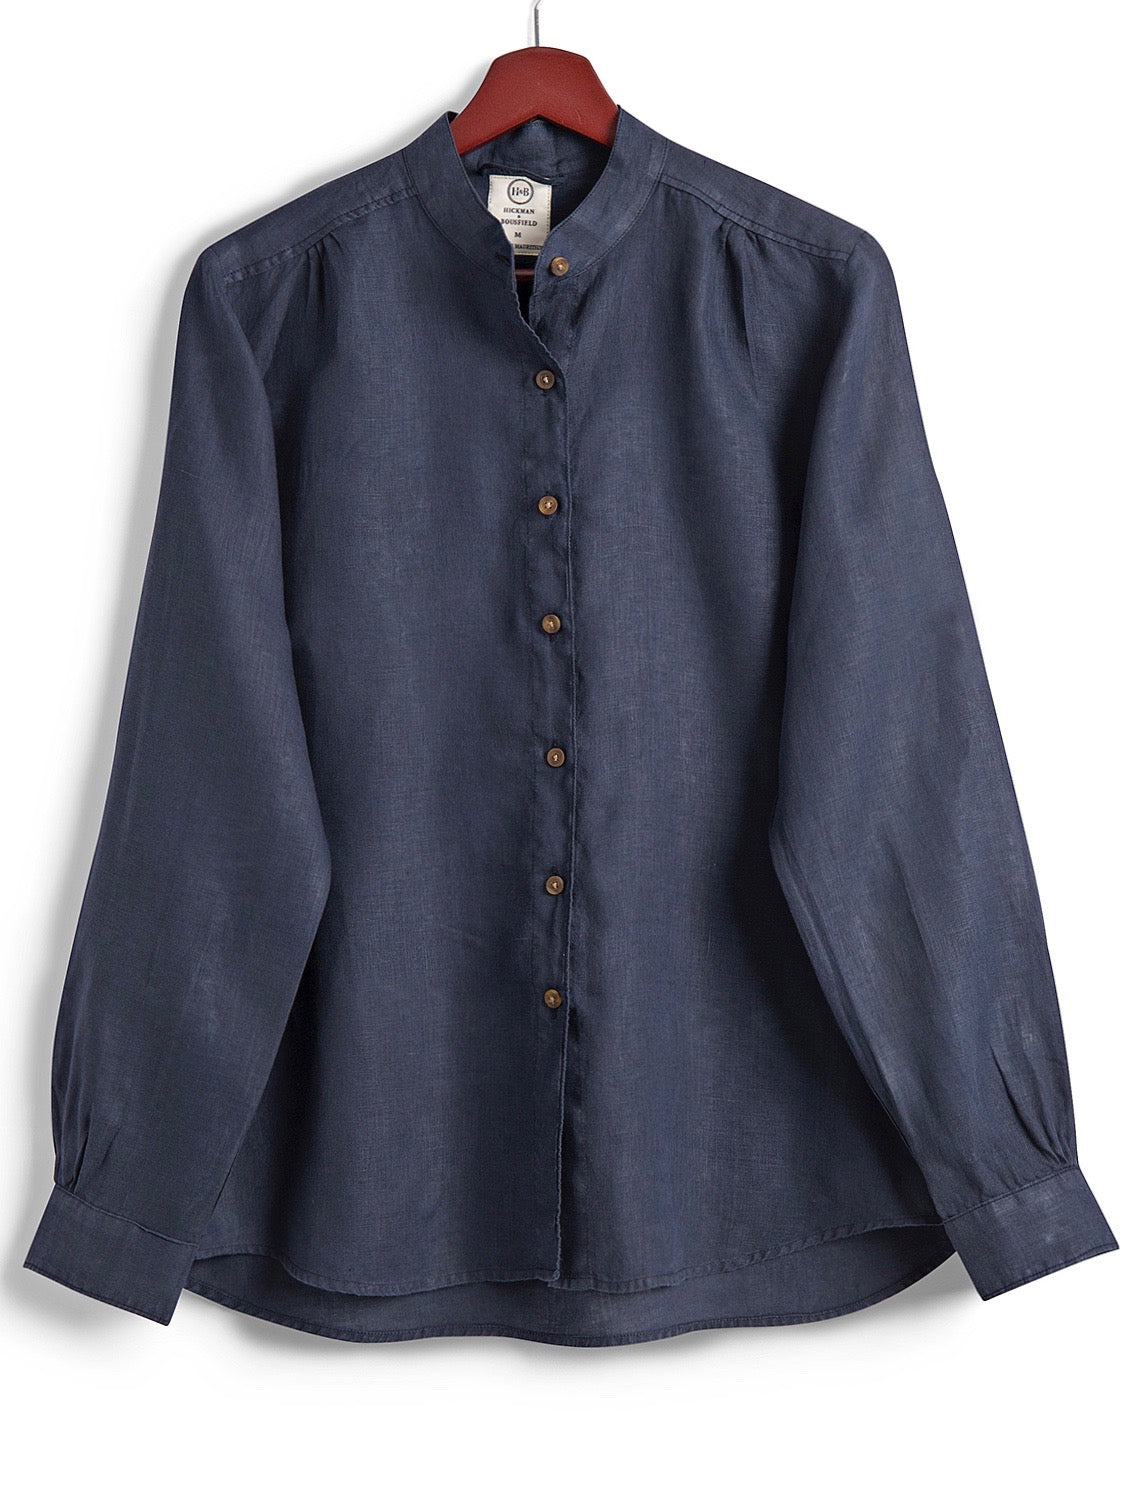 Grandad Shirt in Navy Linen,, Shirt, Hickman & Bousfied - Hickman & Bousfield, Safari and Travel Clothing